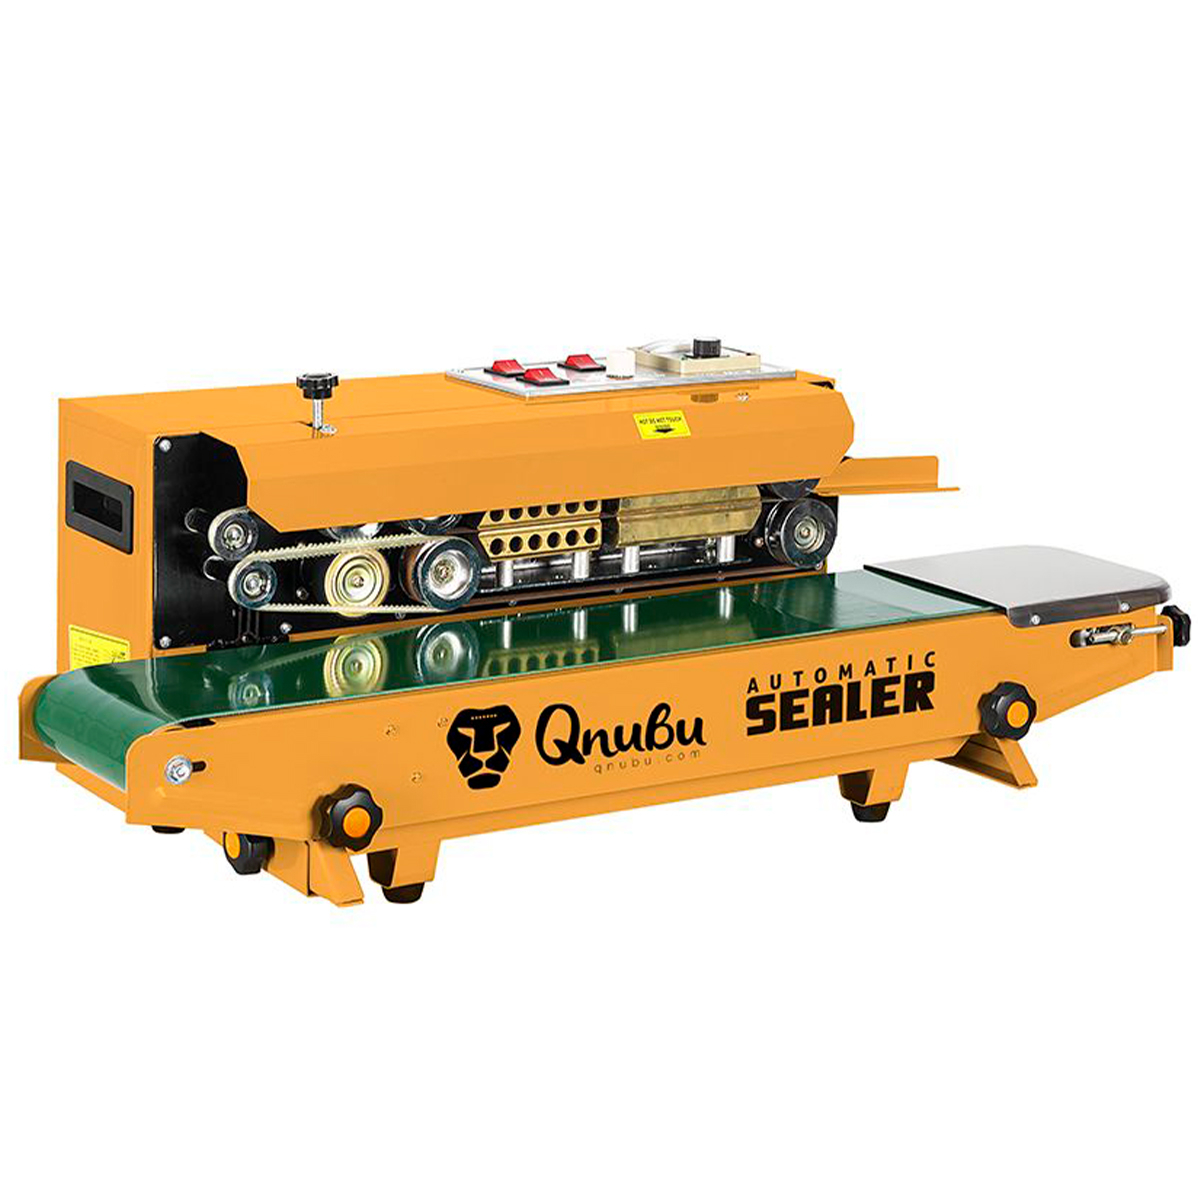  Qnubu Automatic Sealer